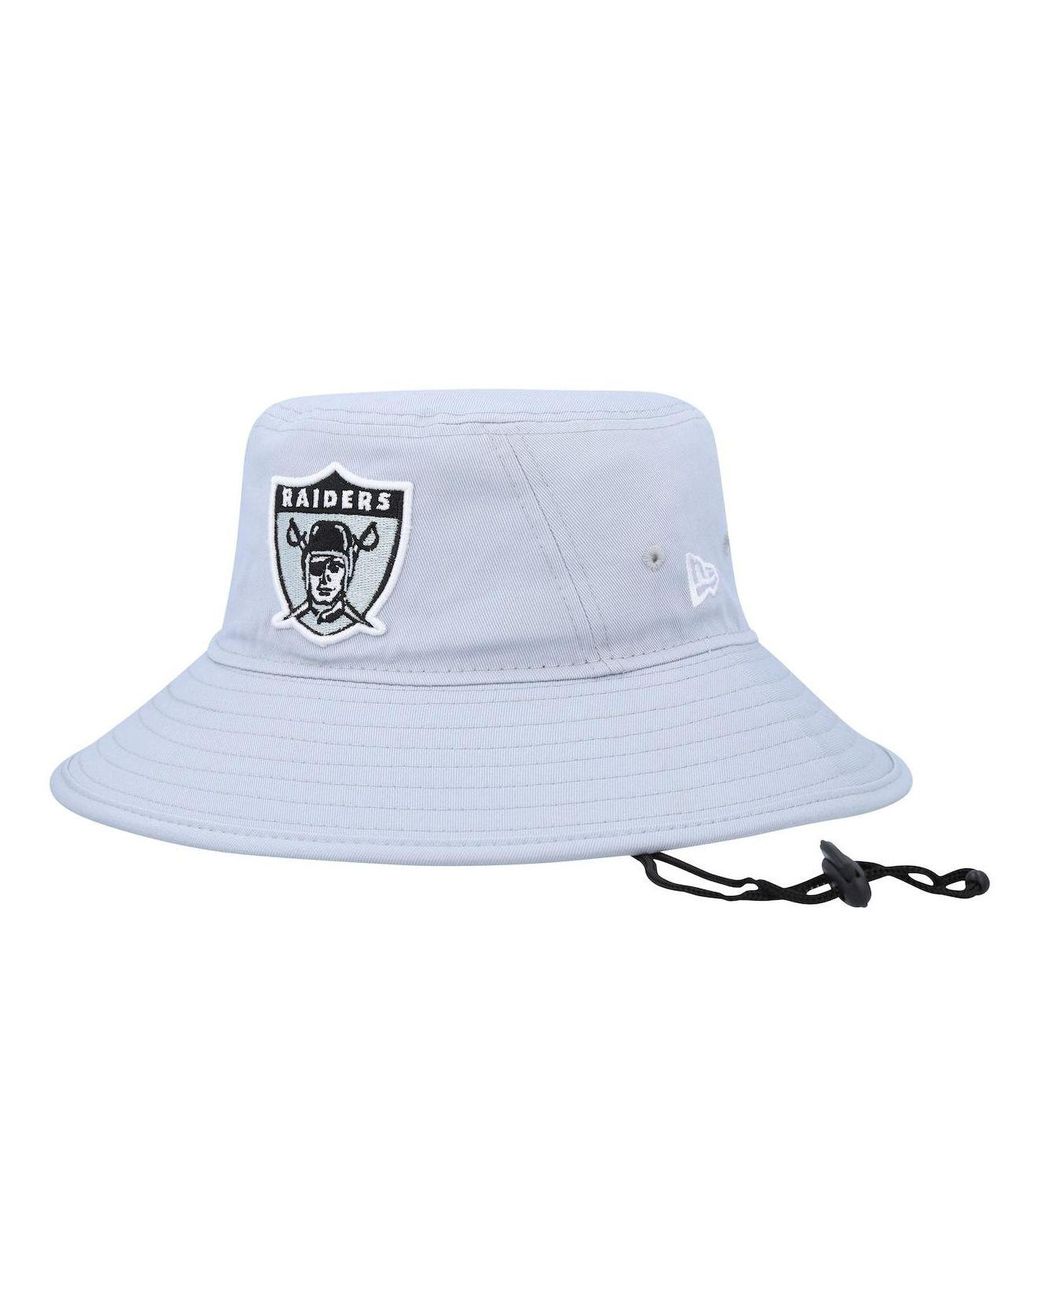 Lids Las Vegas Raiders New Era Botanical 9FIFTY Snapback Hat - White